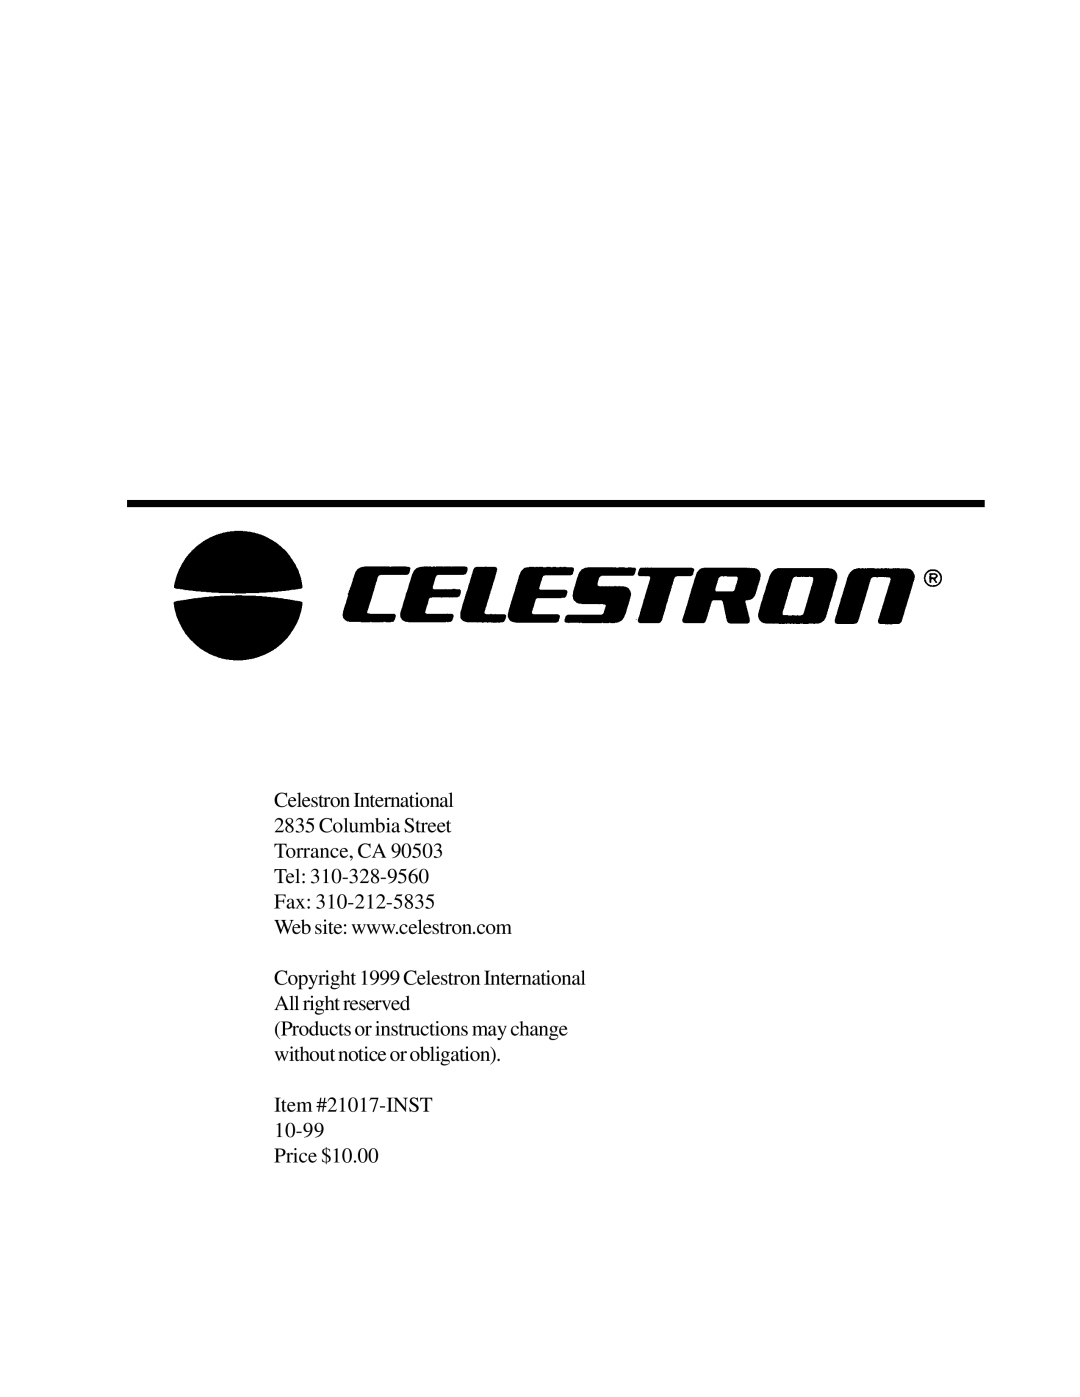 Celestron CR-150 HD Celestron International 2835 Columbia Street, Torrance, CA Tel Fax, Item #21017-INST Price $10.00 